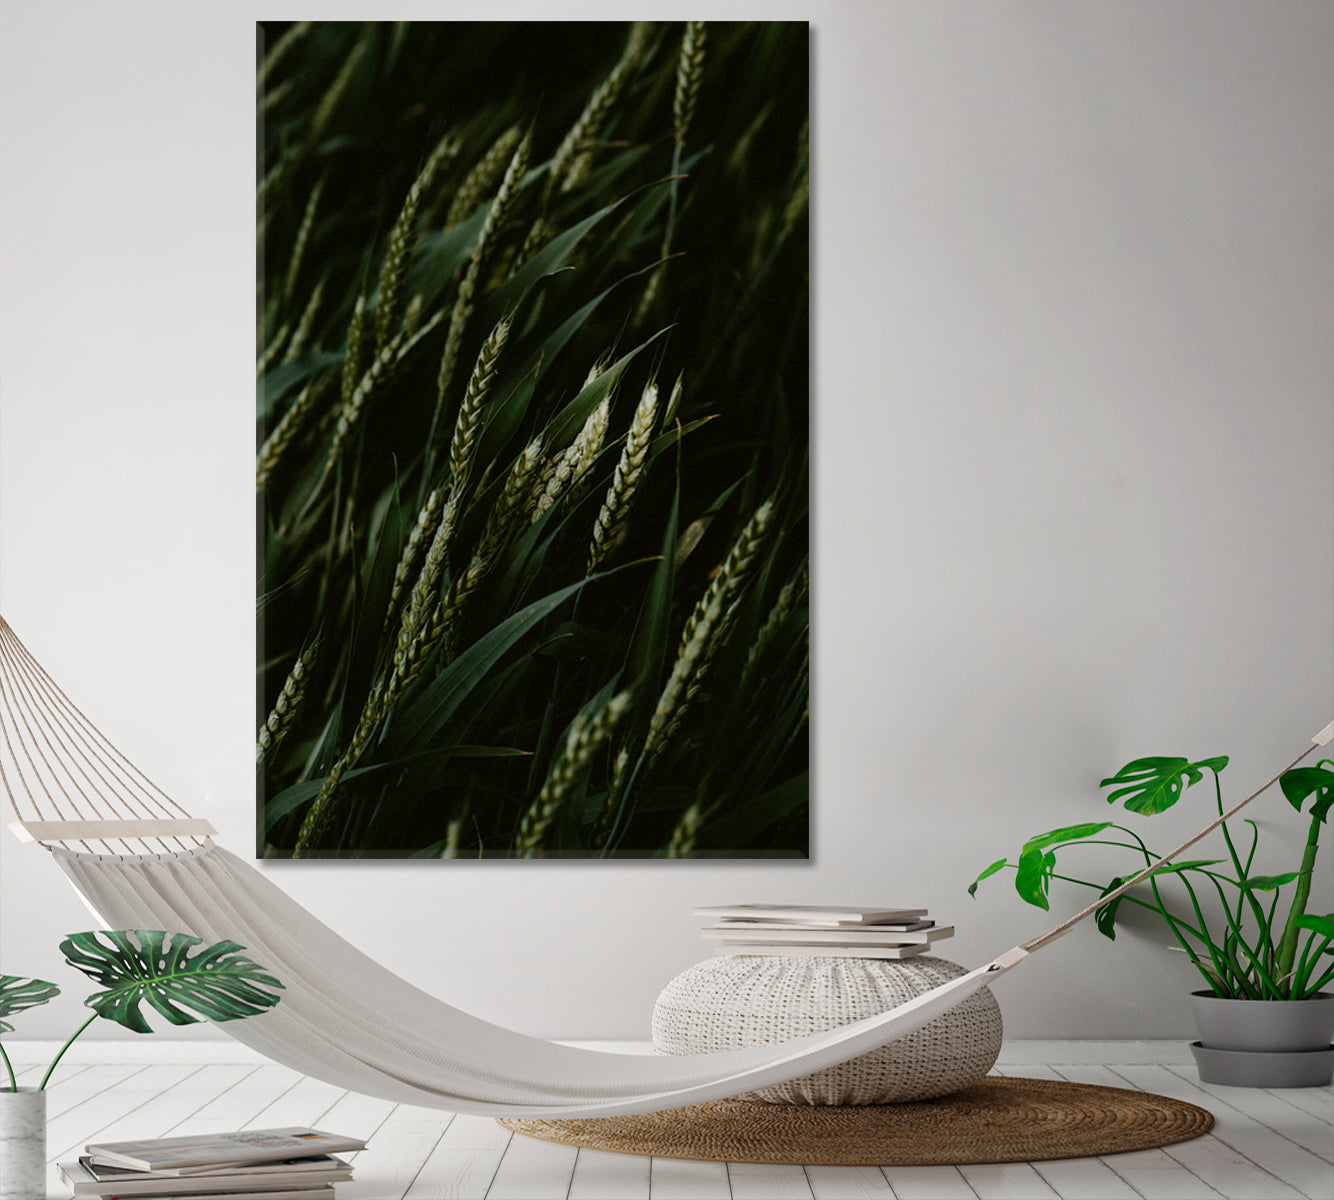 GREEN HOME The Beauty of Green Wheat Sticks Natural Plants Canvas Print - Vertical 1 panel Floral & Botanical Split Art Artesty   